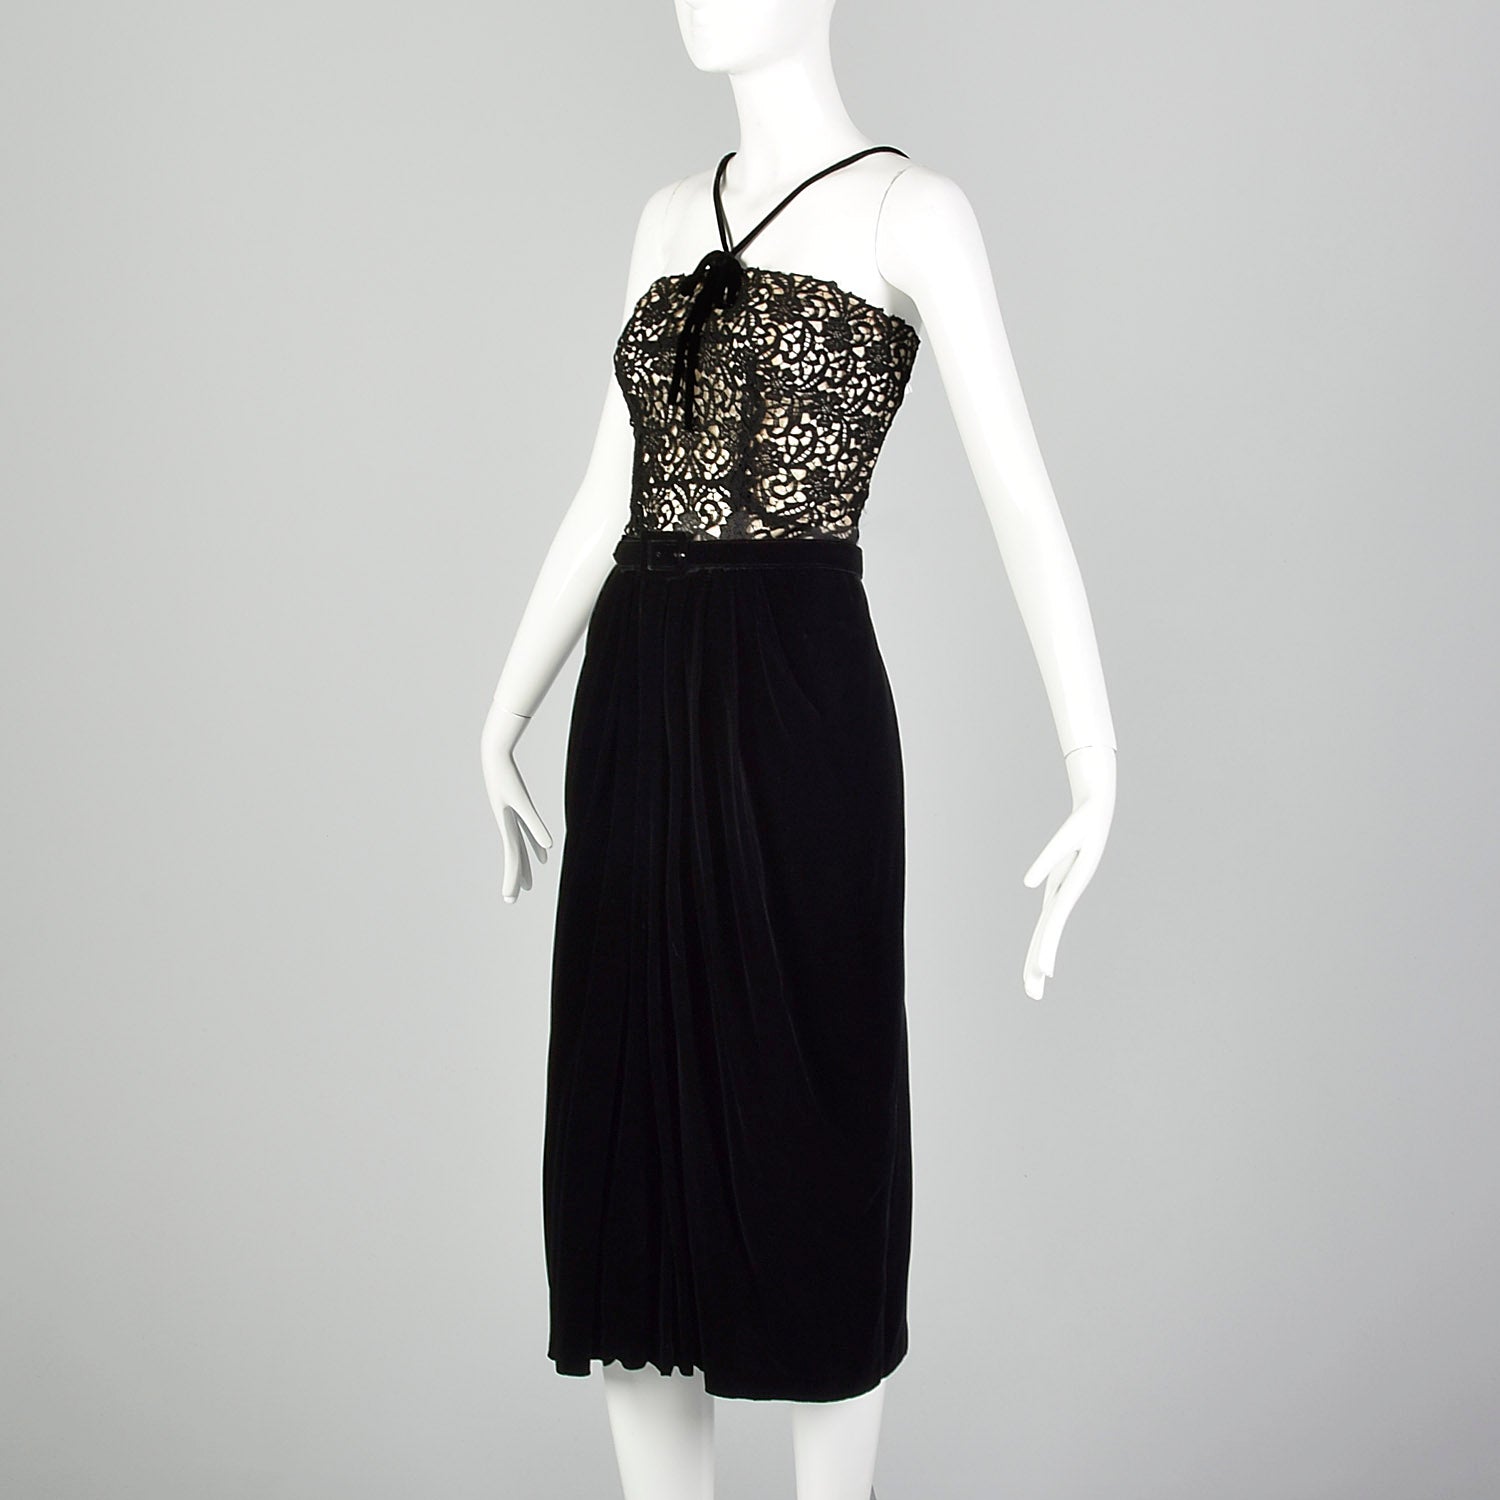 Small 1940s Illusion Bodice Evening Dress